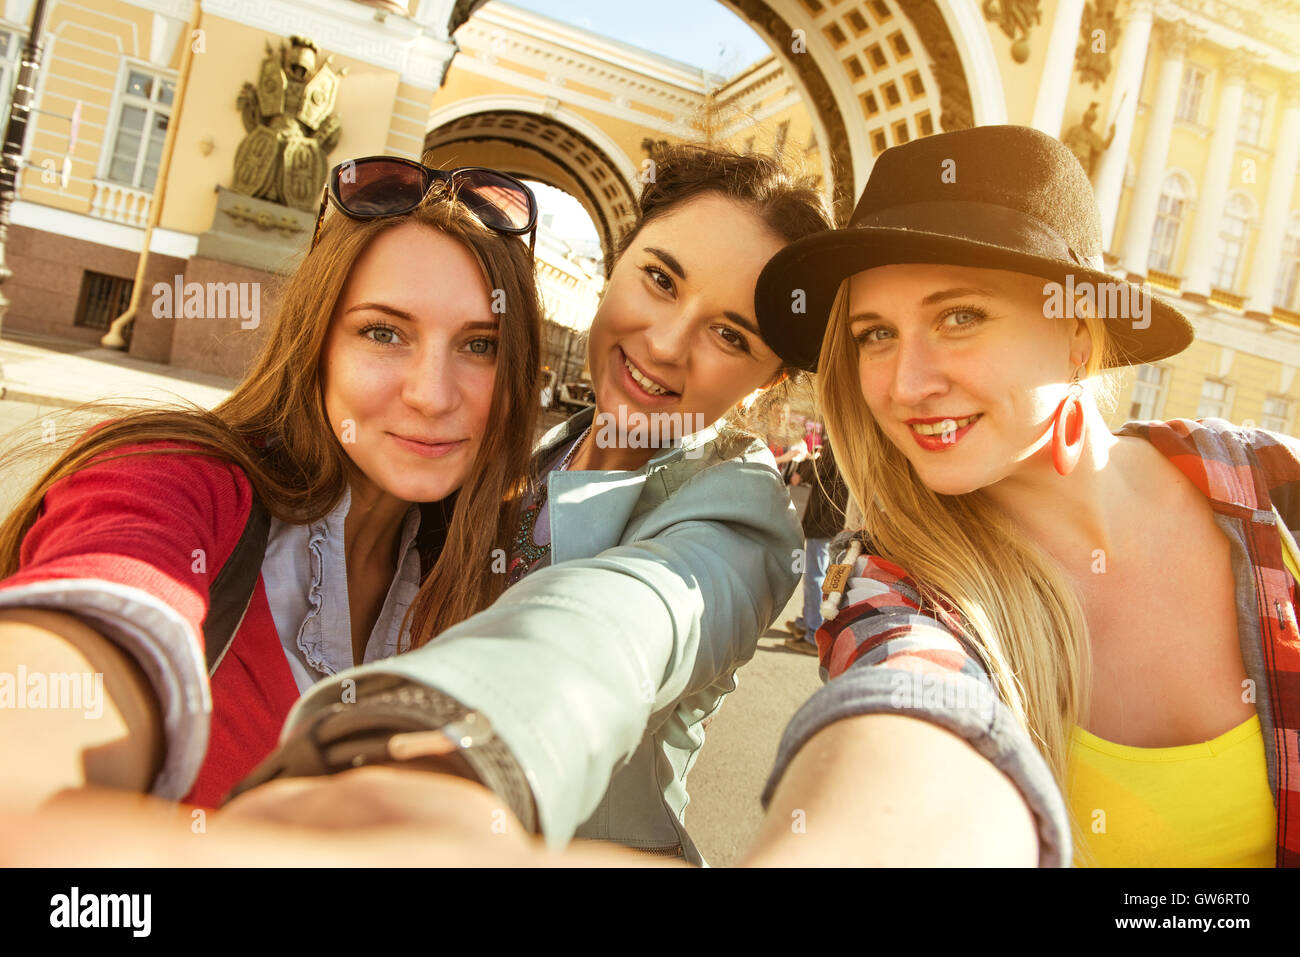 Group of girls friends taking happy selfie Stock Photo